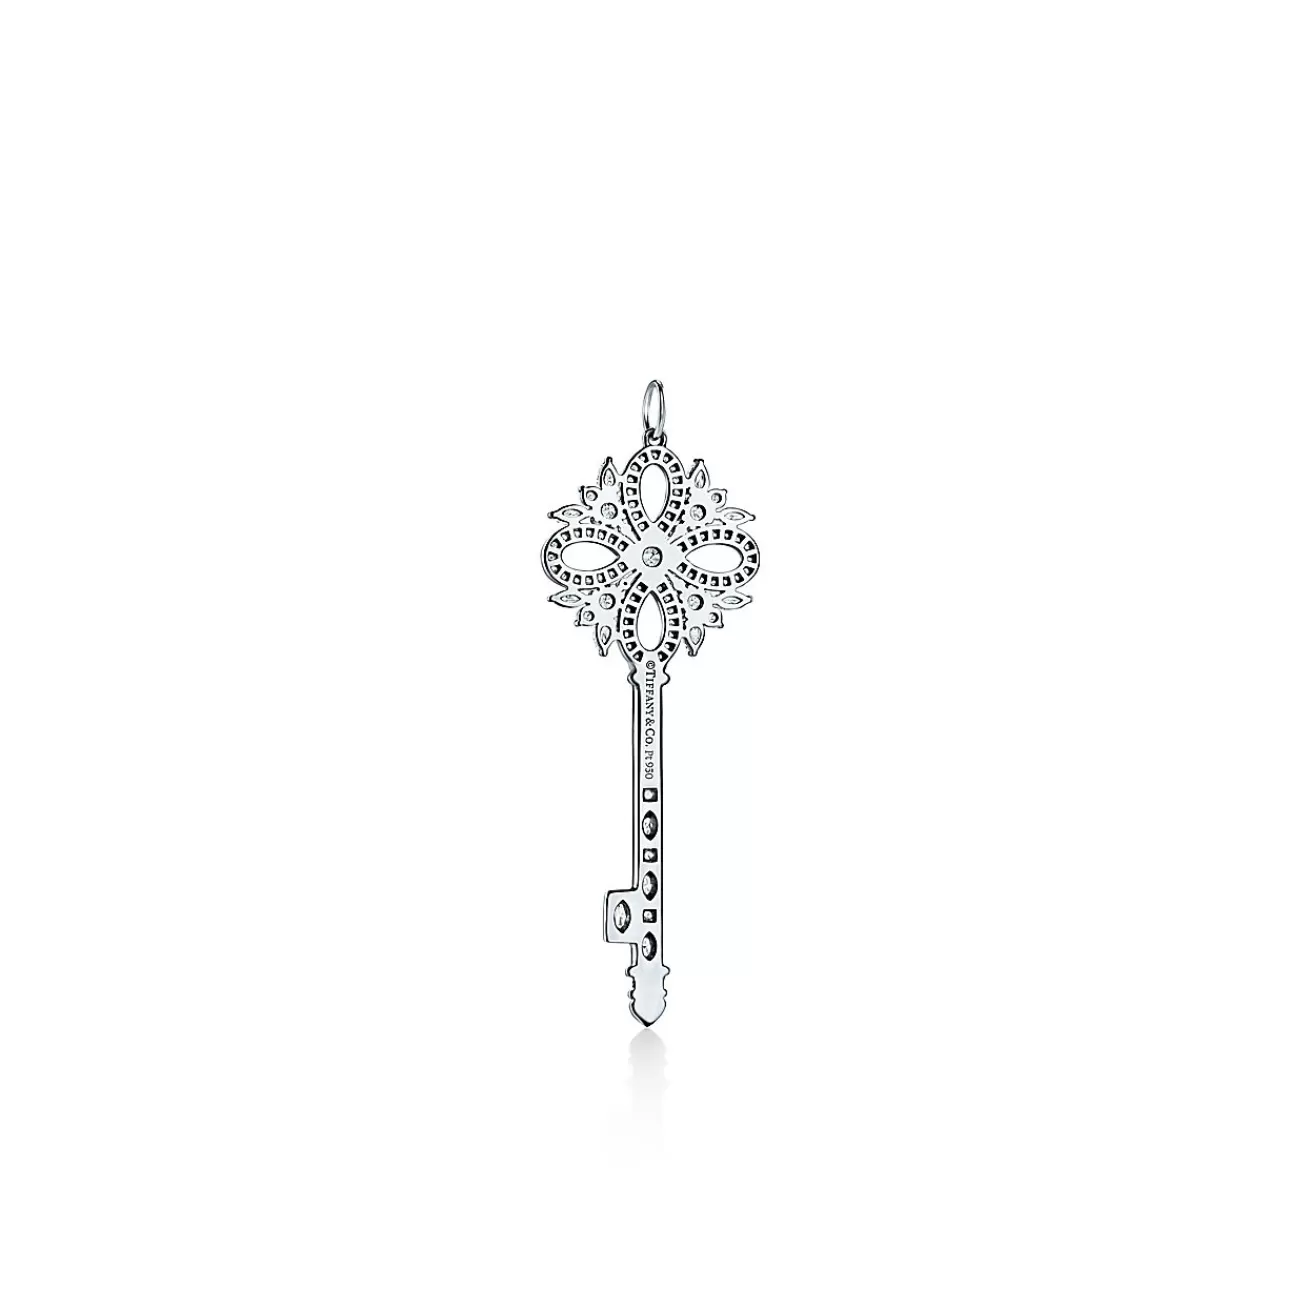 Tiffany & Co. Tiffany Keys Tiffany Victoria® key pendant in platinum with diamonds. | ^ Platinum Jewelry | Diamond Jewelry